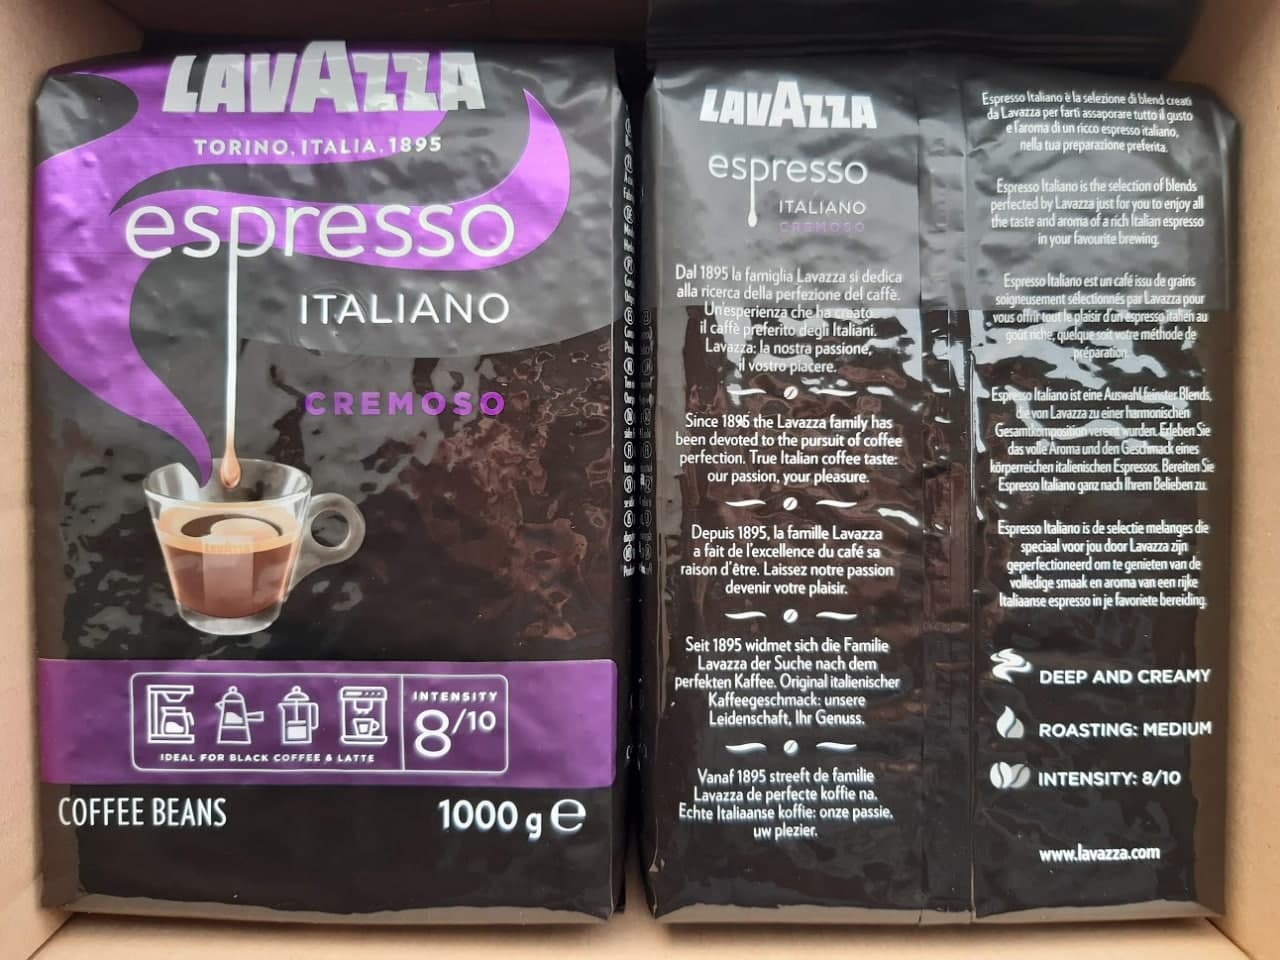 Pupiņu kafija "LAVAZZA" Espresso Italiano Cremoso